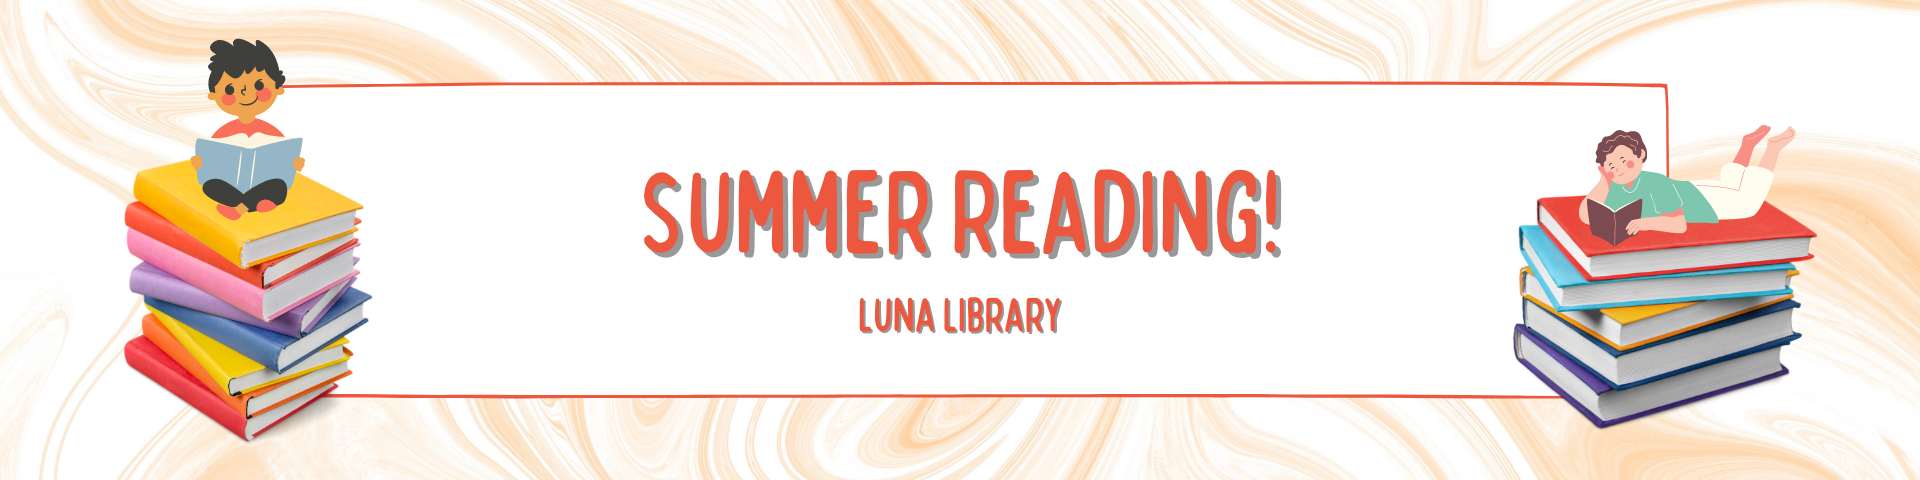 summer reading luna library 